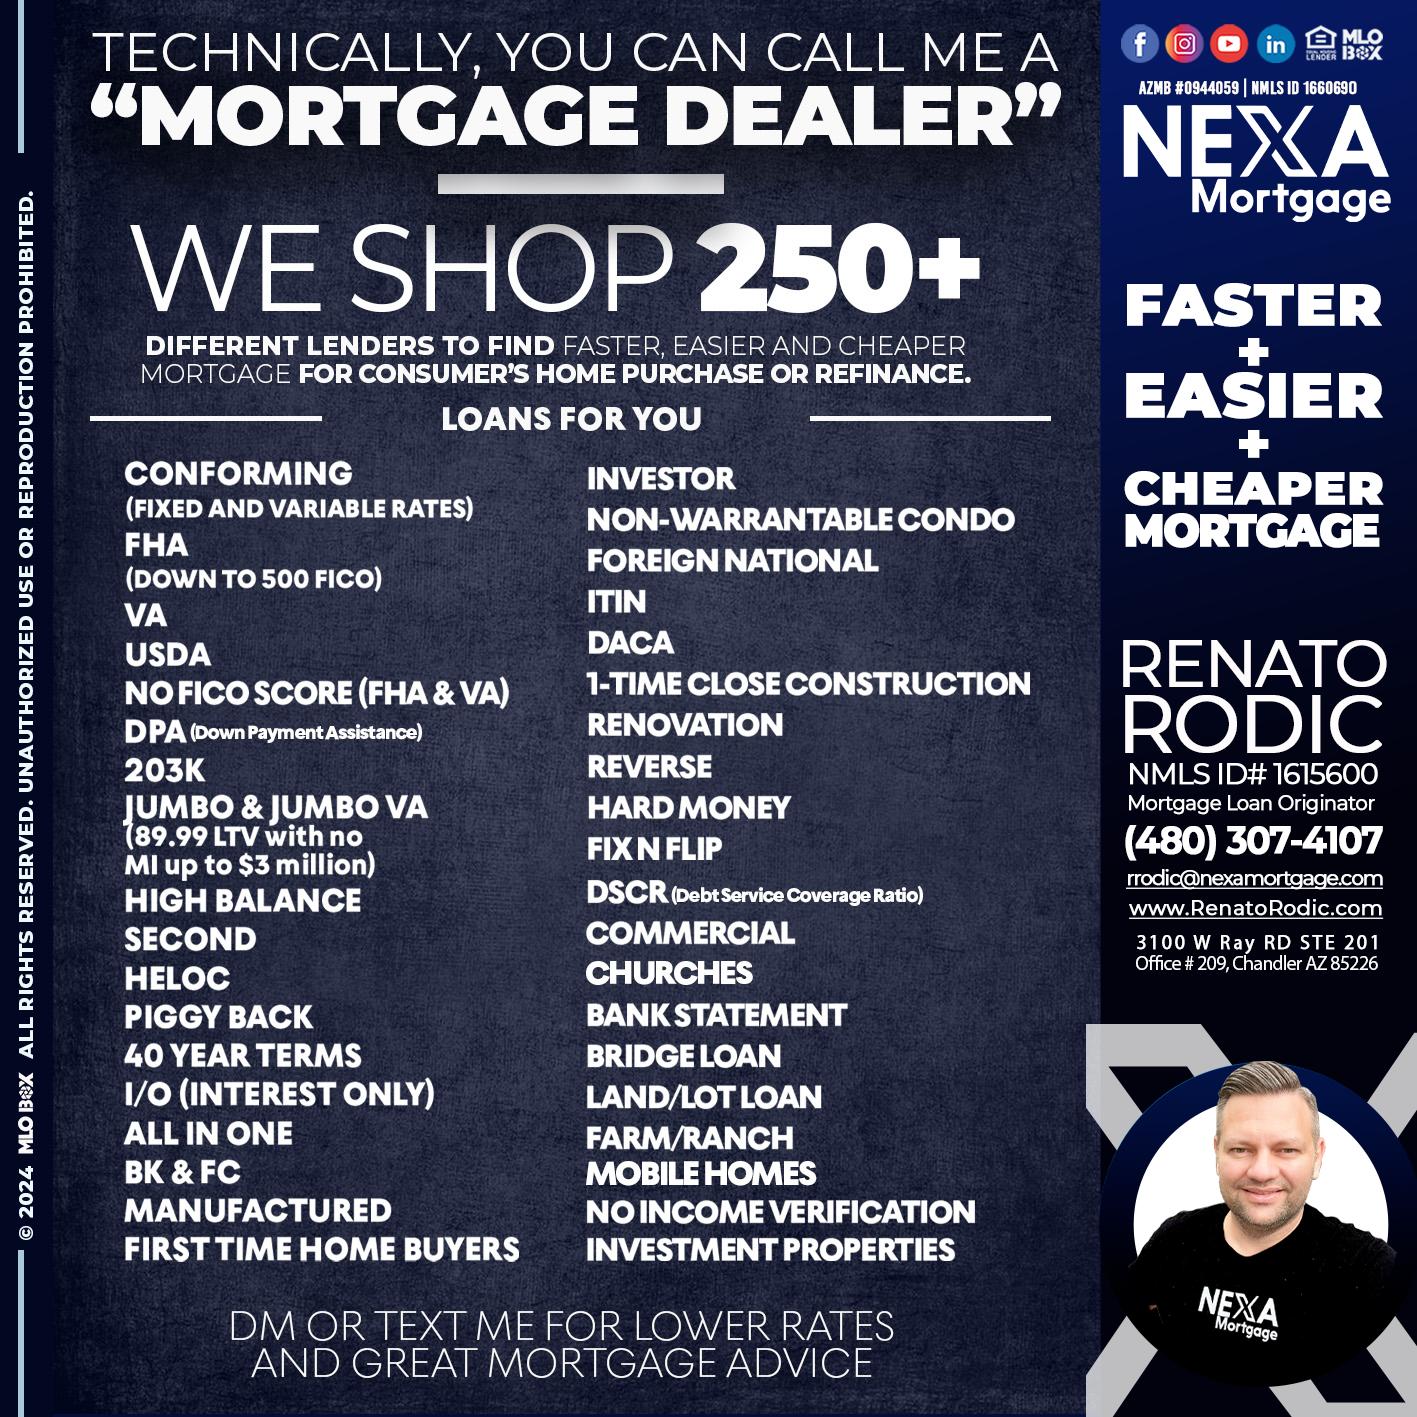 WE SHOP 250 - Renato Rodic -Mortgage Loan Originator